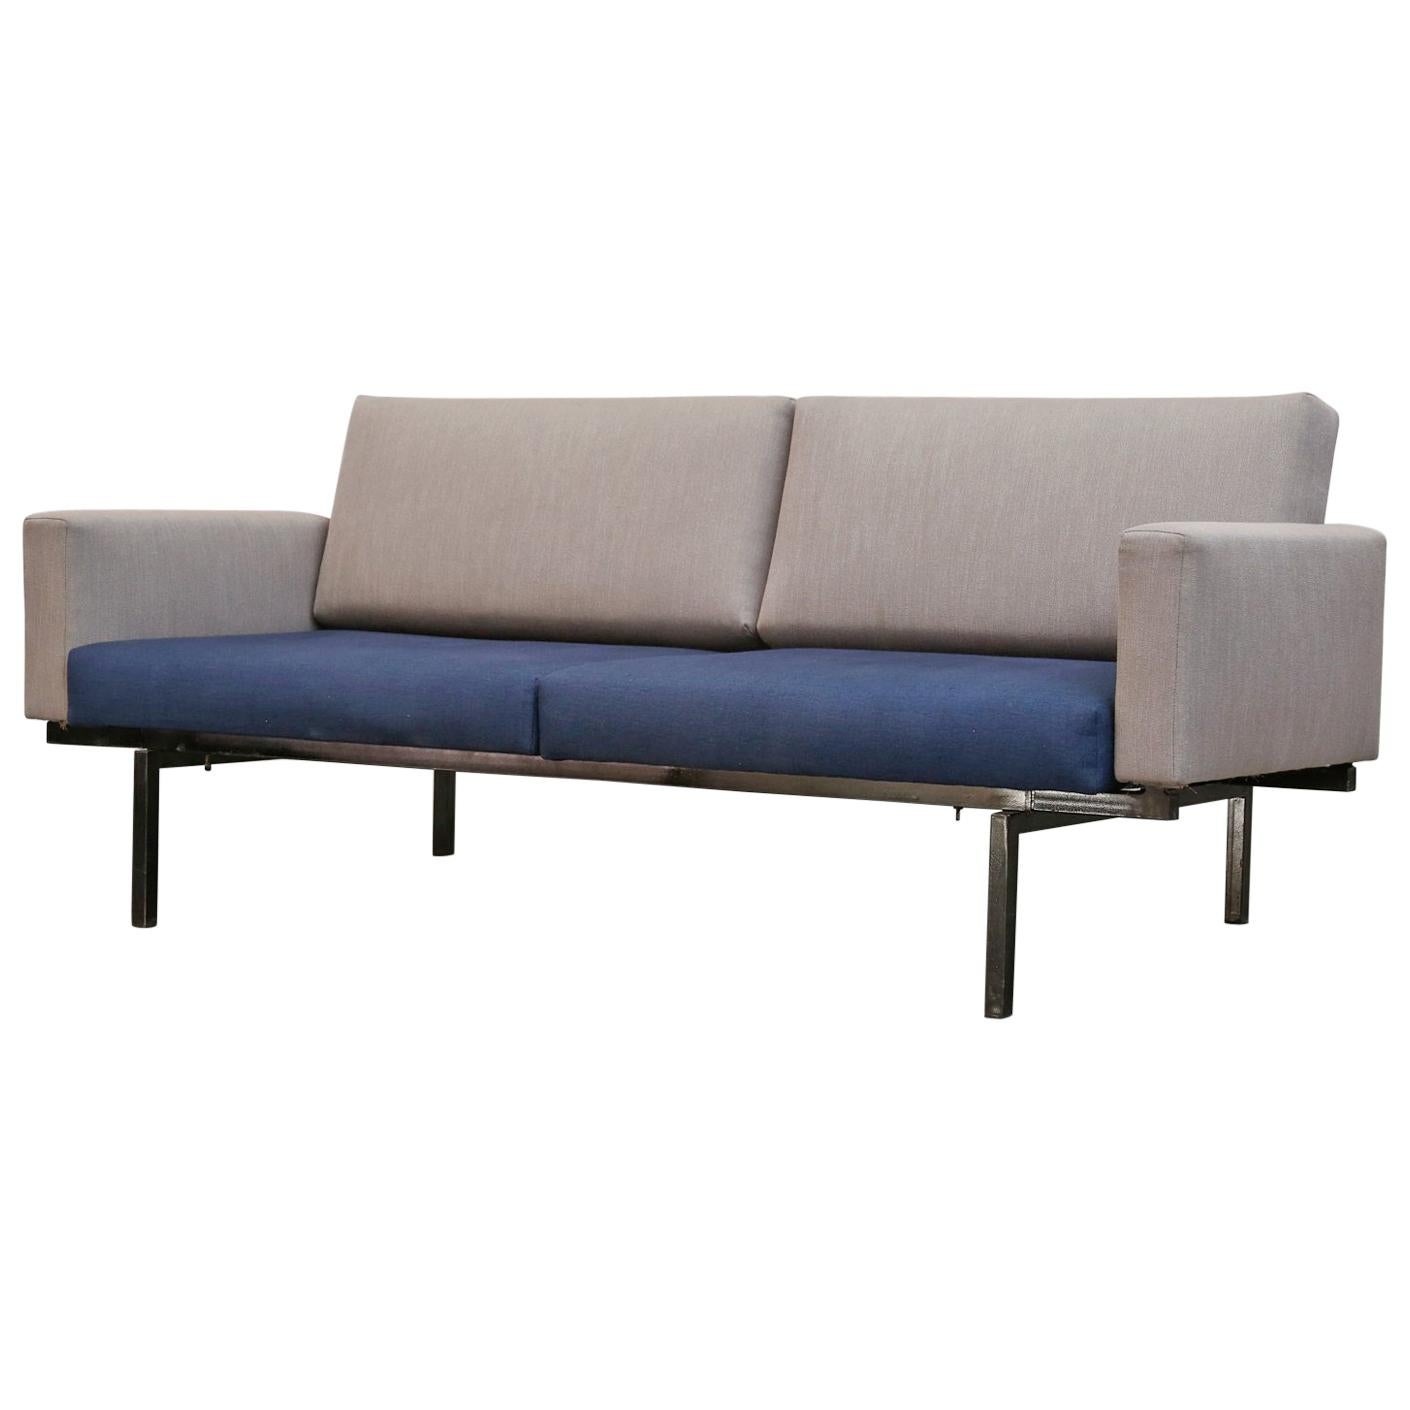 Coen de Vries Gray and Blue Sleeper Sofa from Pilastro